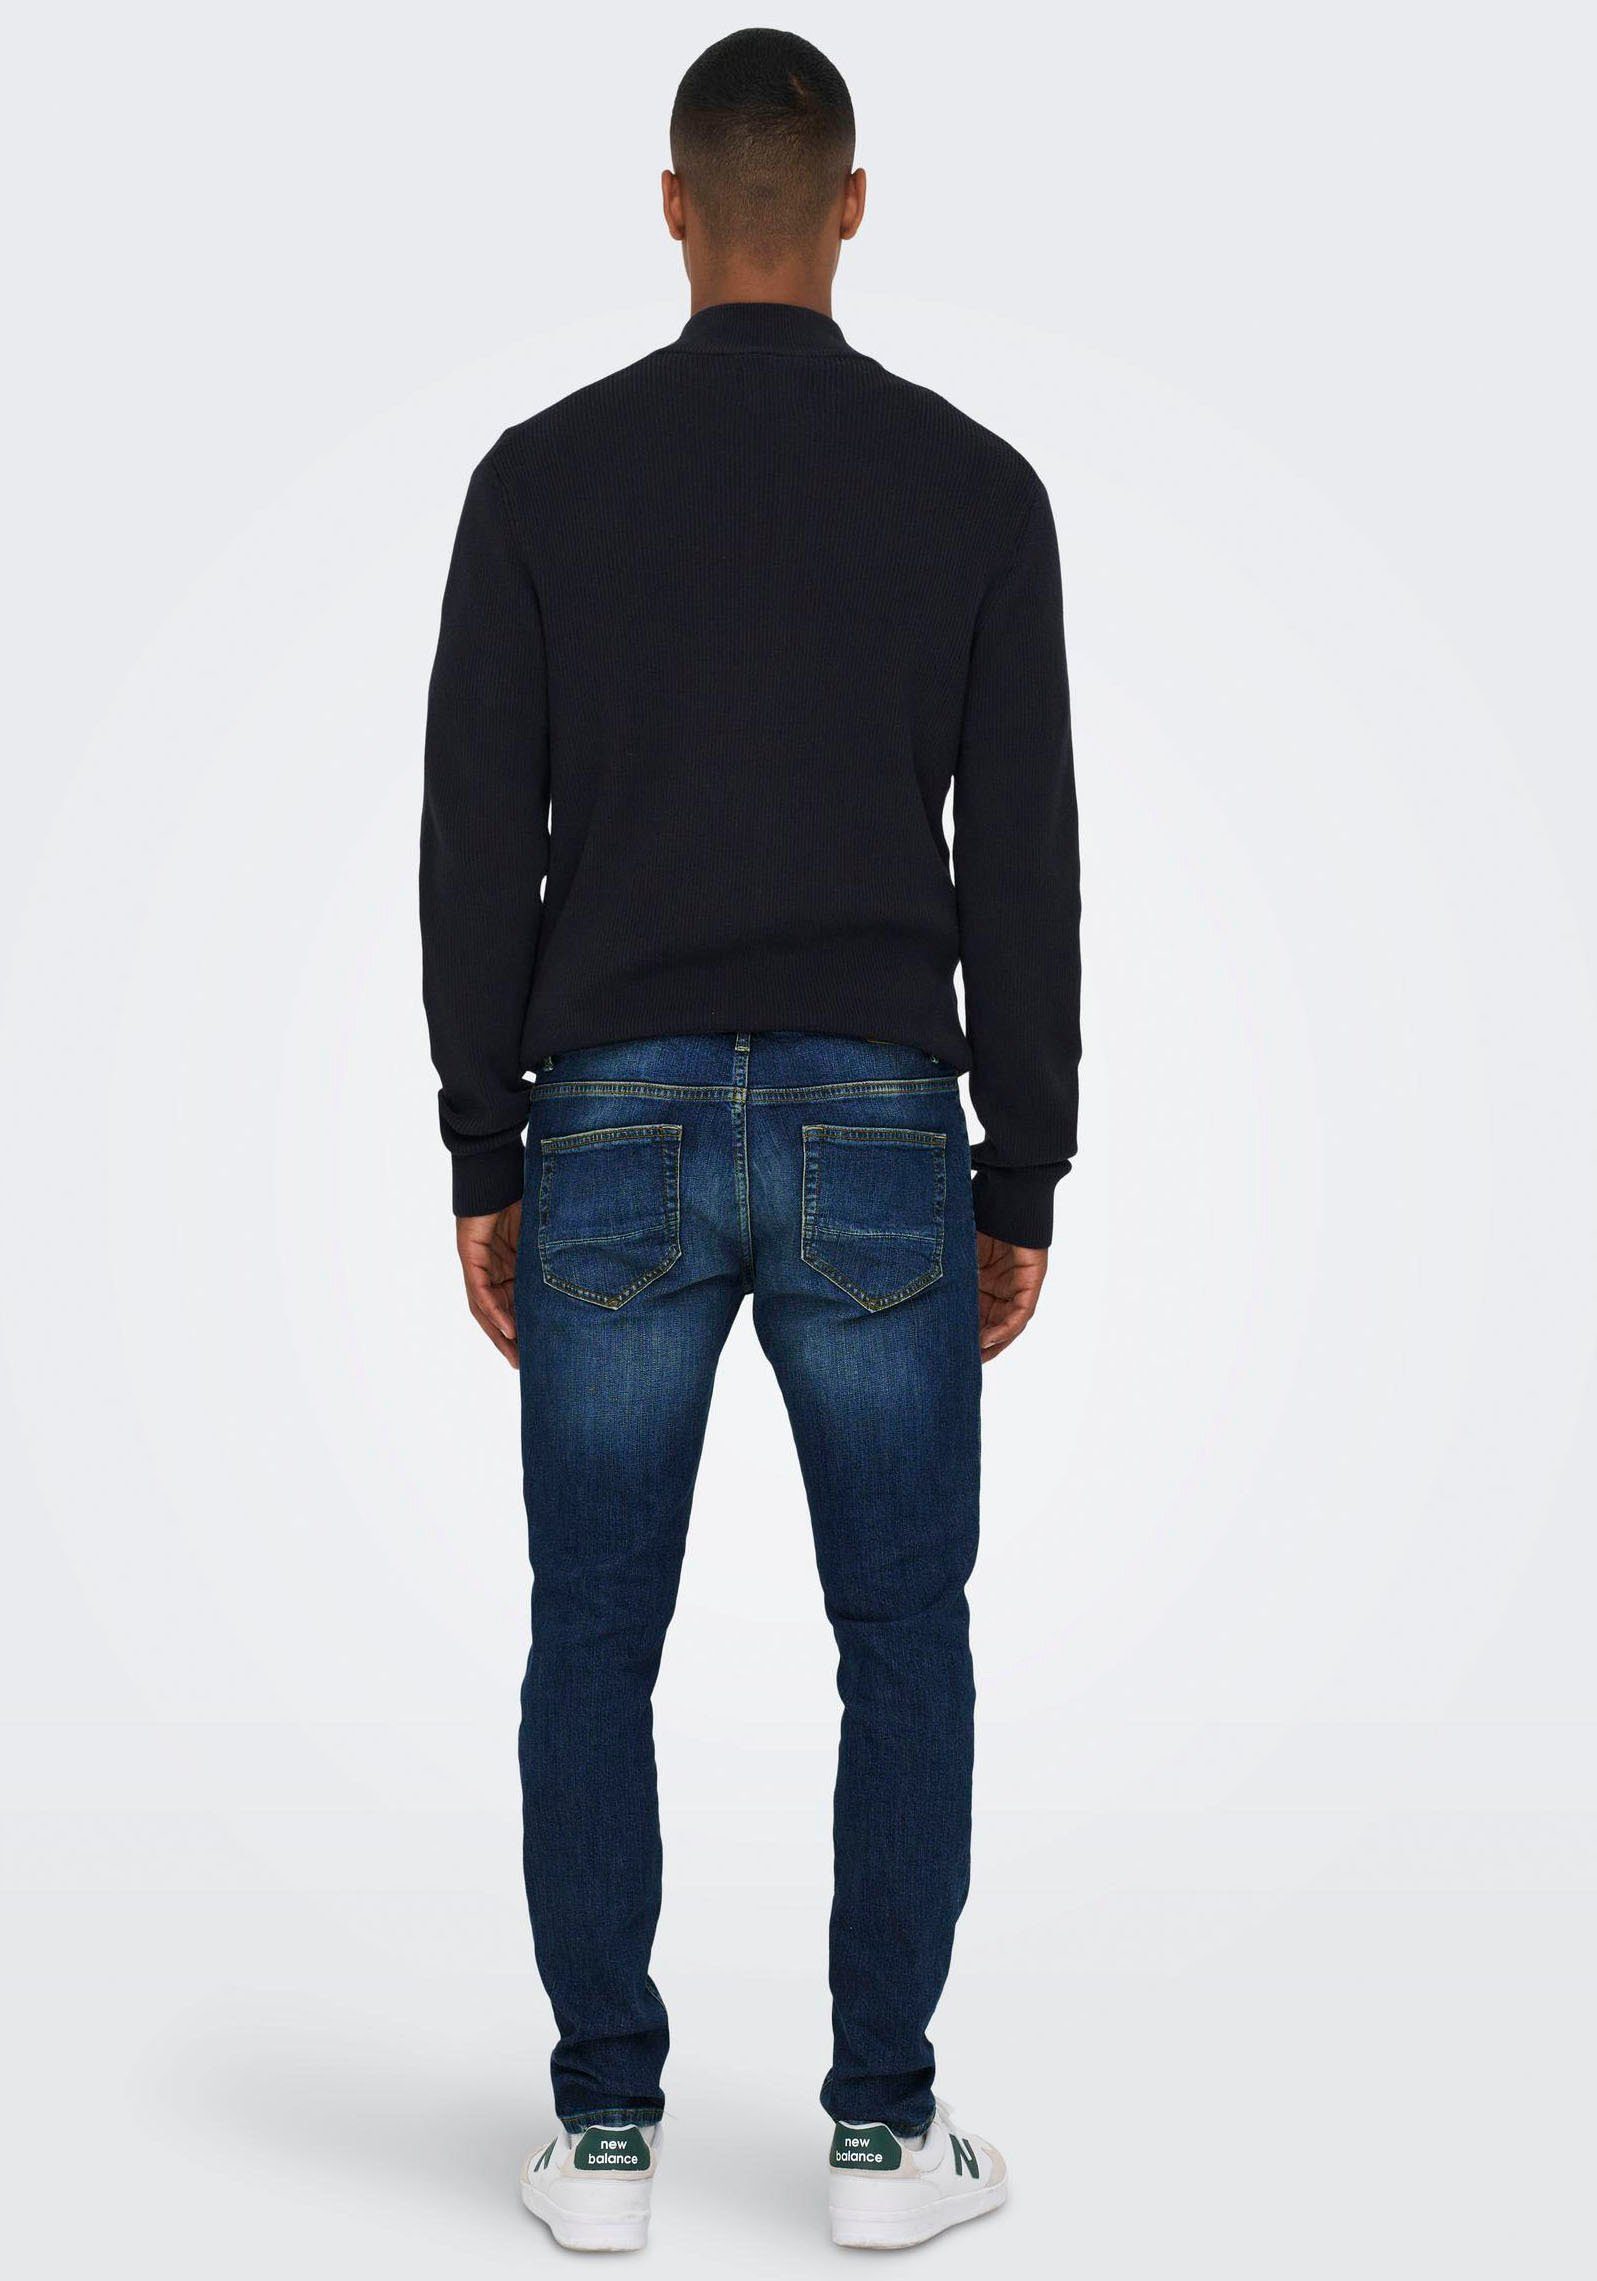 ONLY & SONS Slim fit jeans ONSLOOM SLIM D. BLUE 7777 DNM JEANS OT